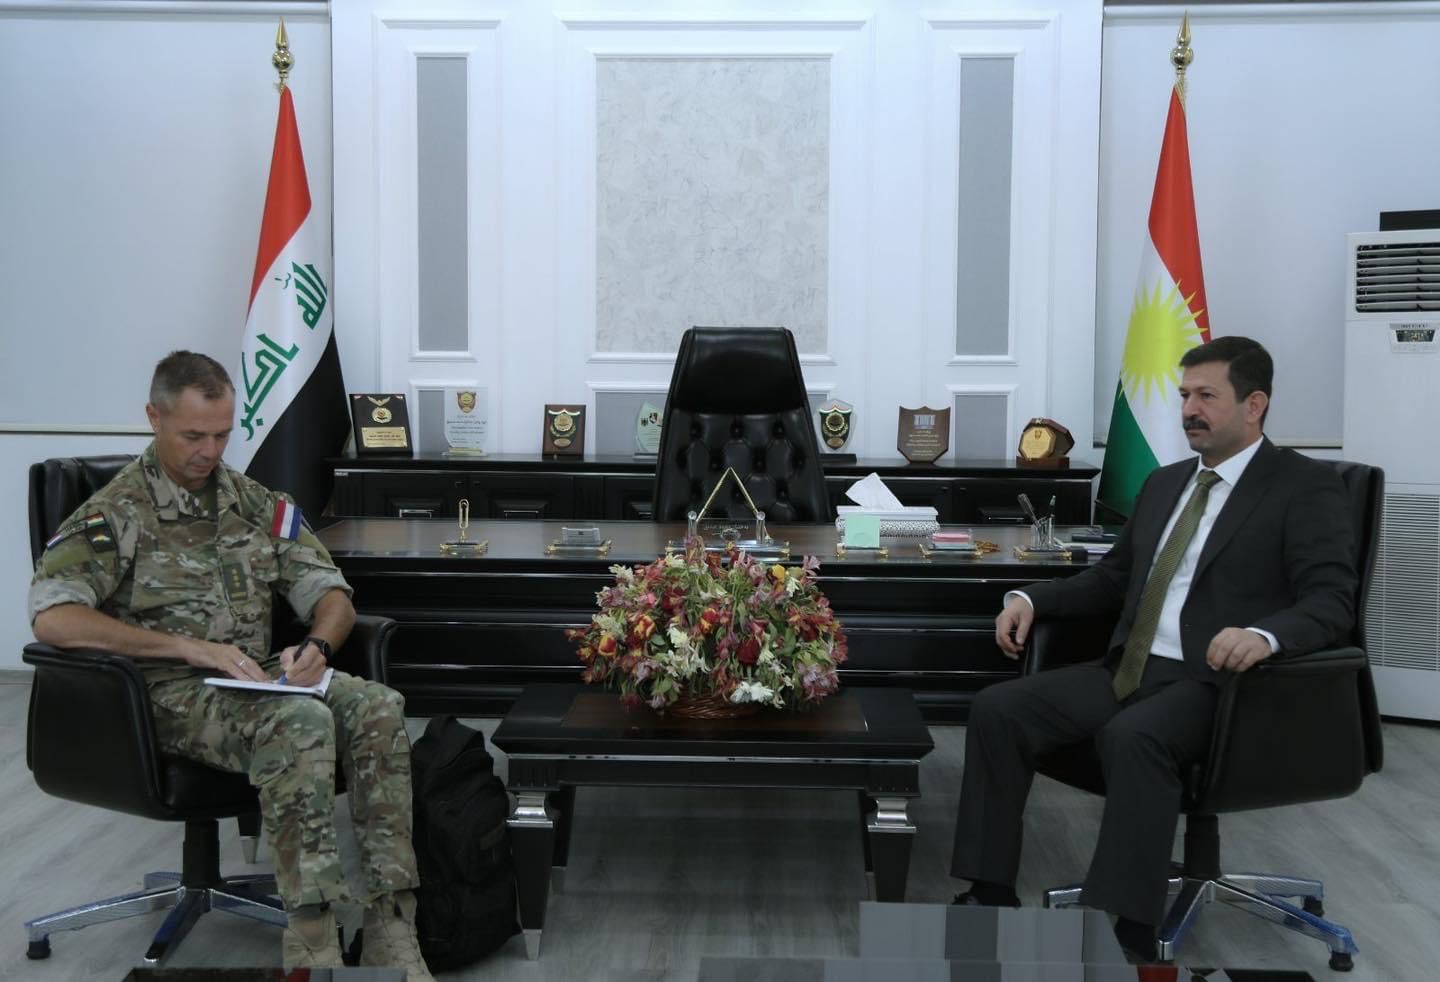 Netherlands reaffirms support for Peshmerga forces